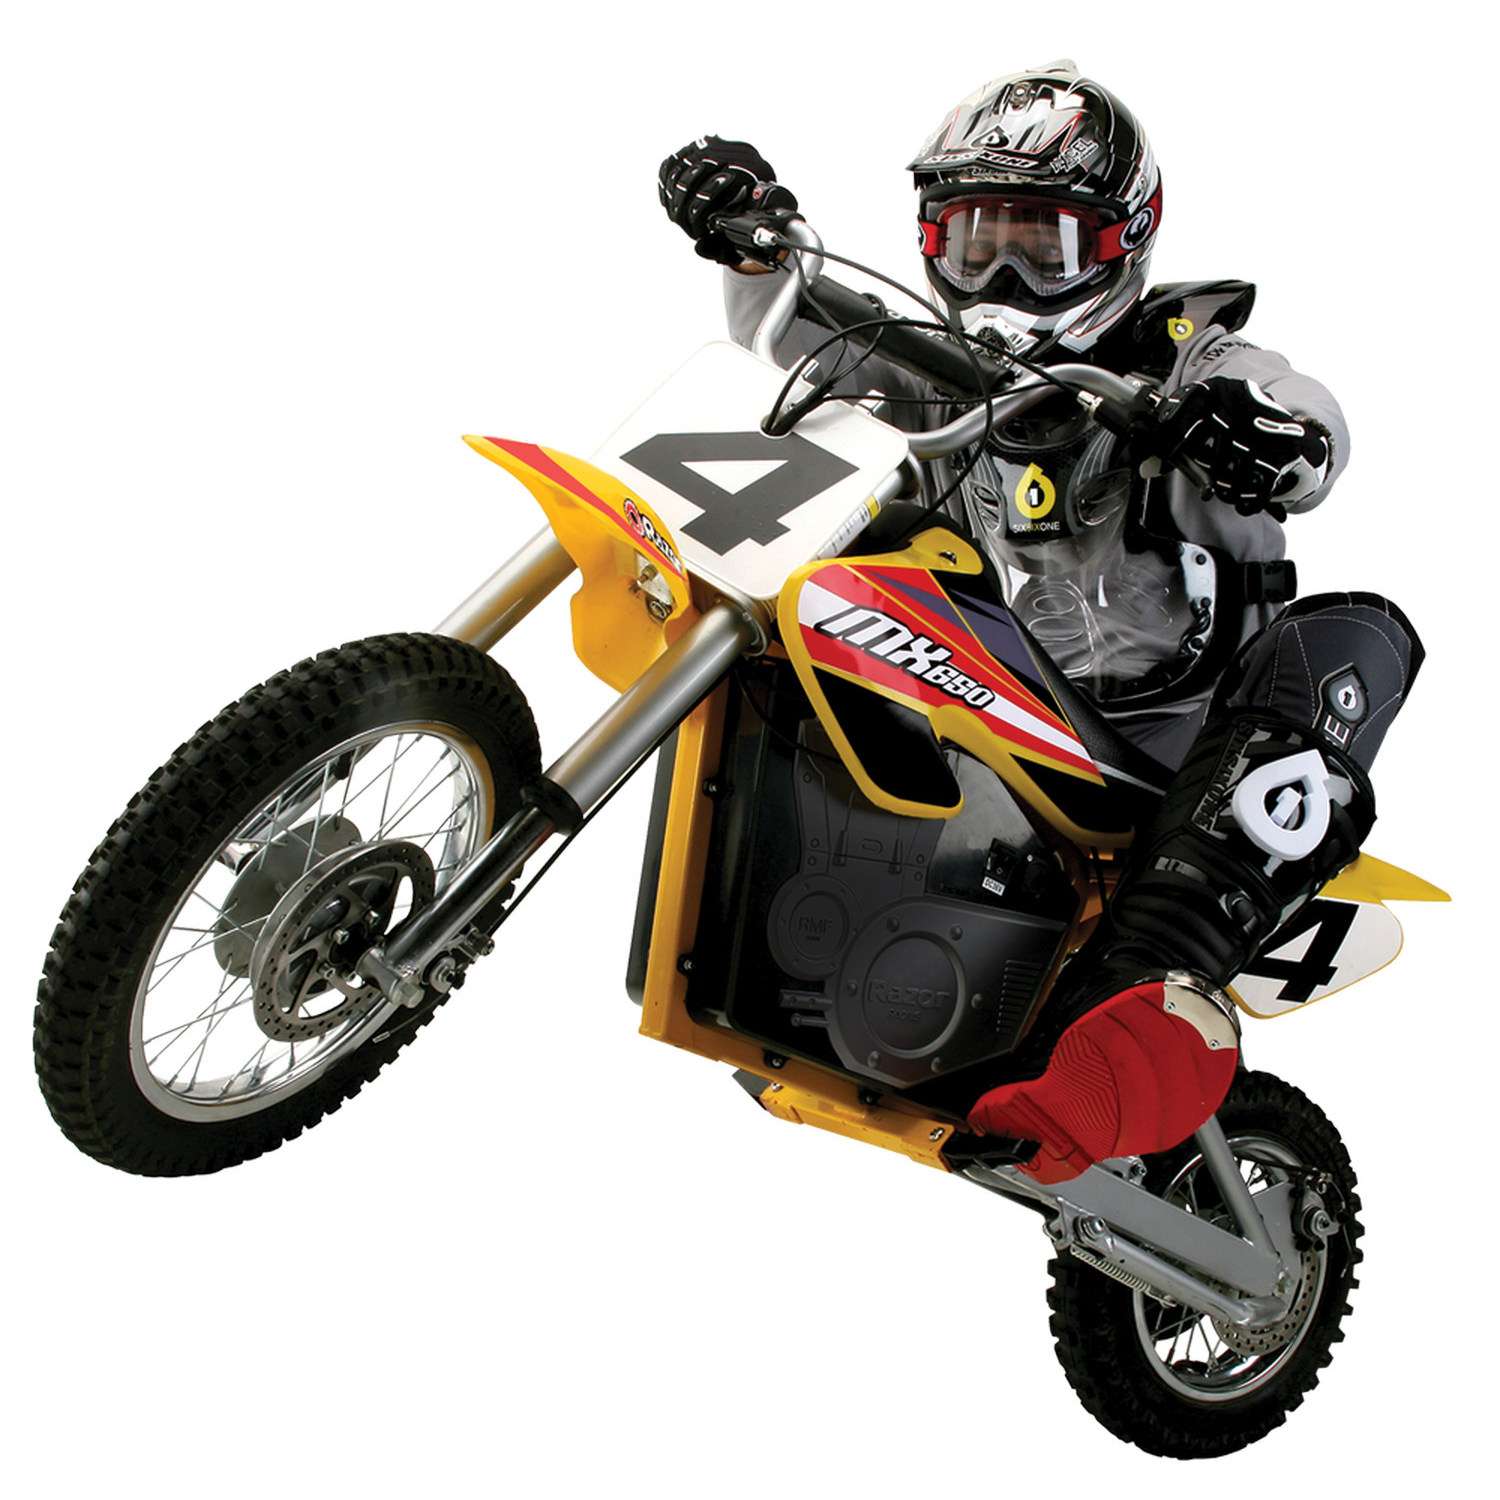 Электромотоцикл для детей RAZOR MX650 жёлтый с амортизаторами для бездорожья - фото 5